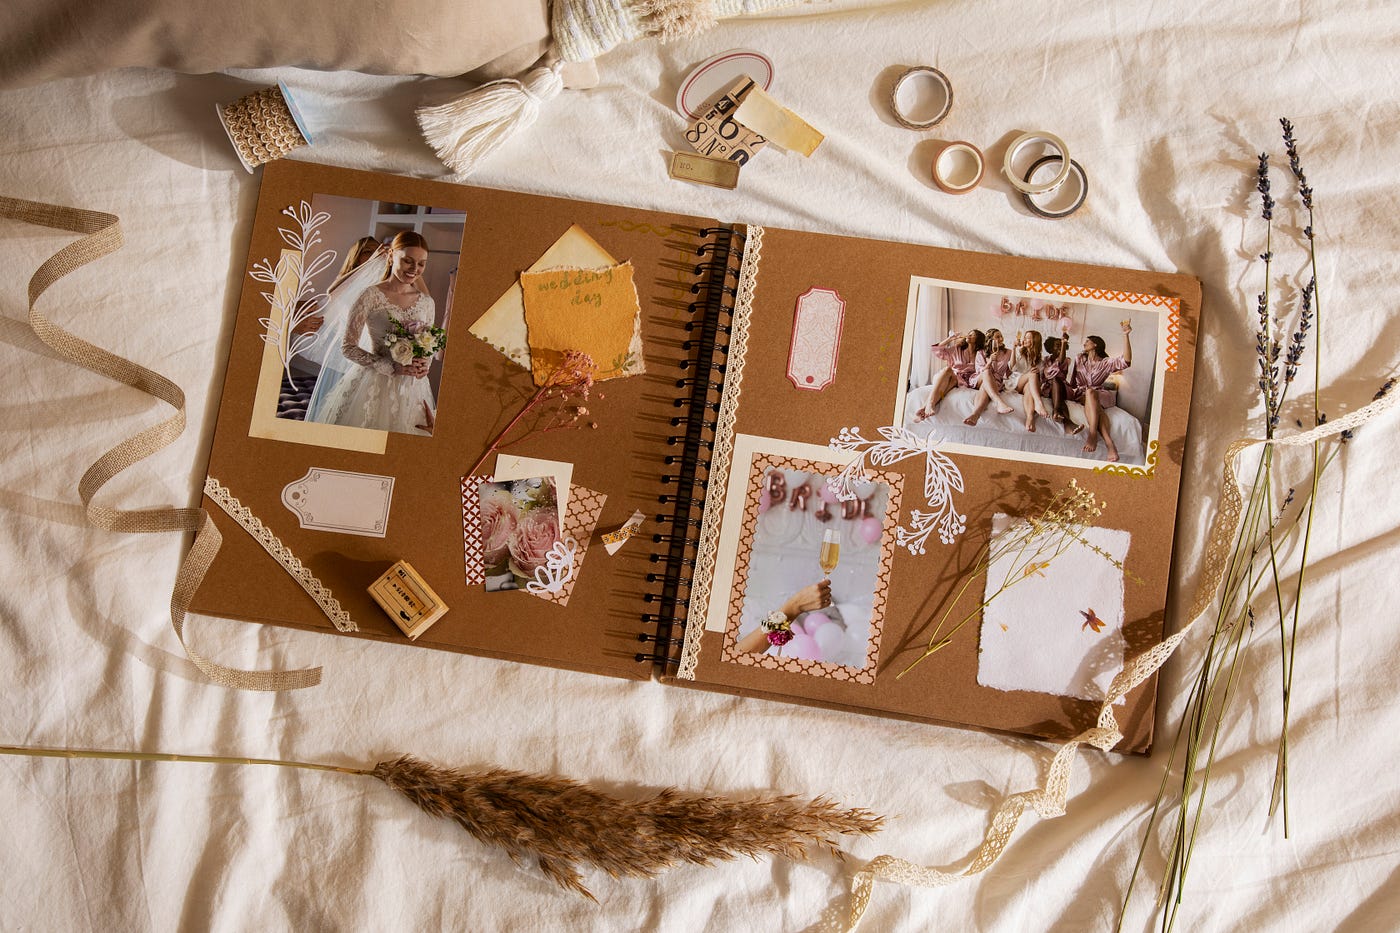 Converting Creative Memories Scrapbooks to Photo Albums